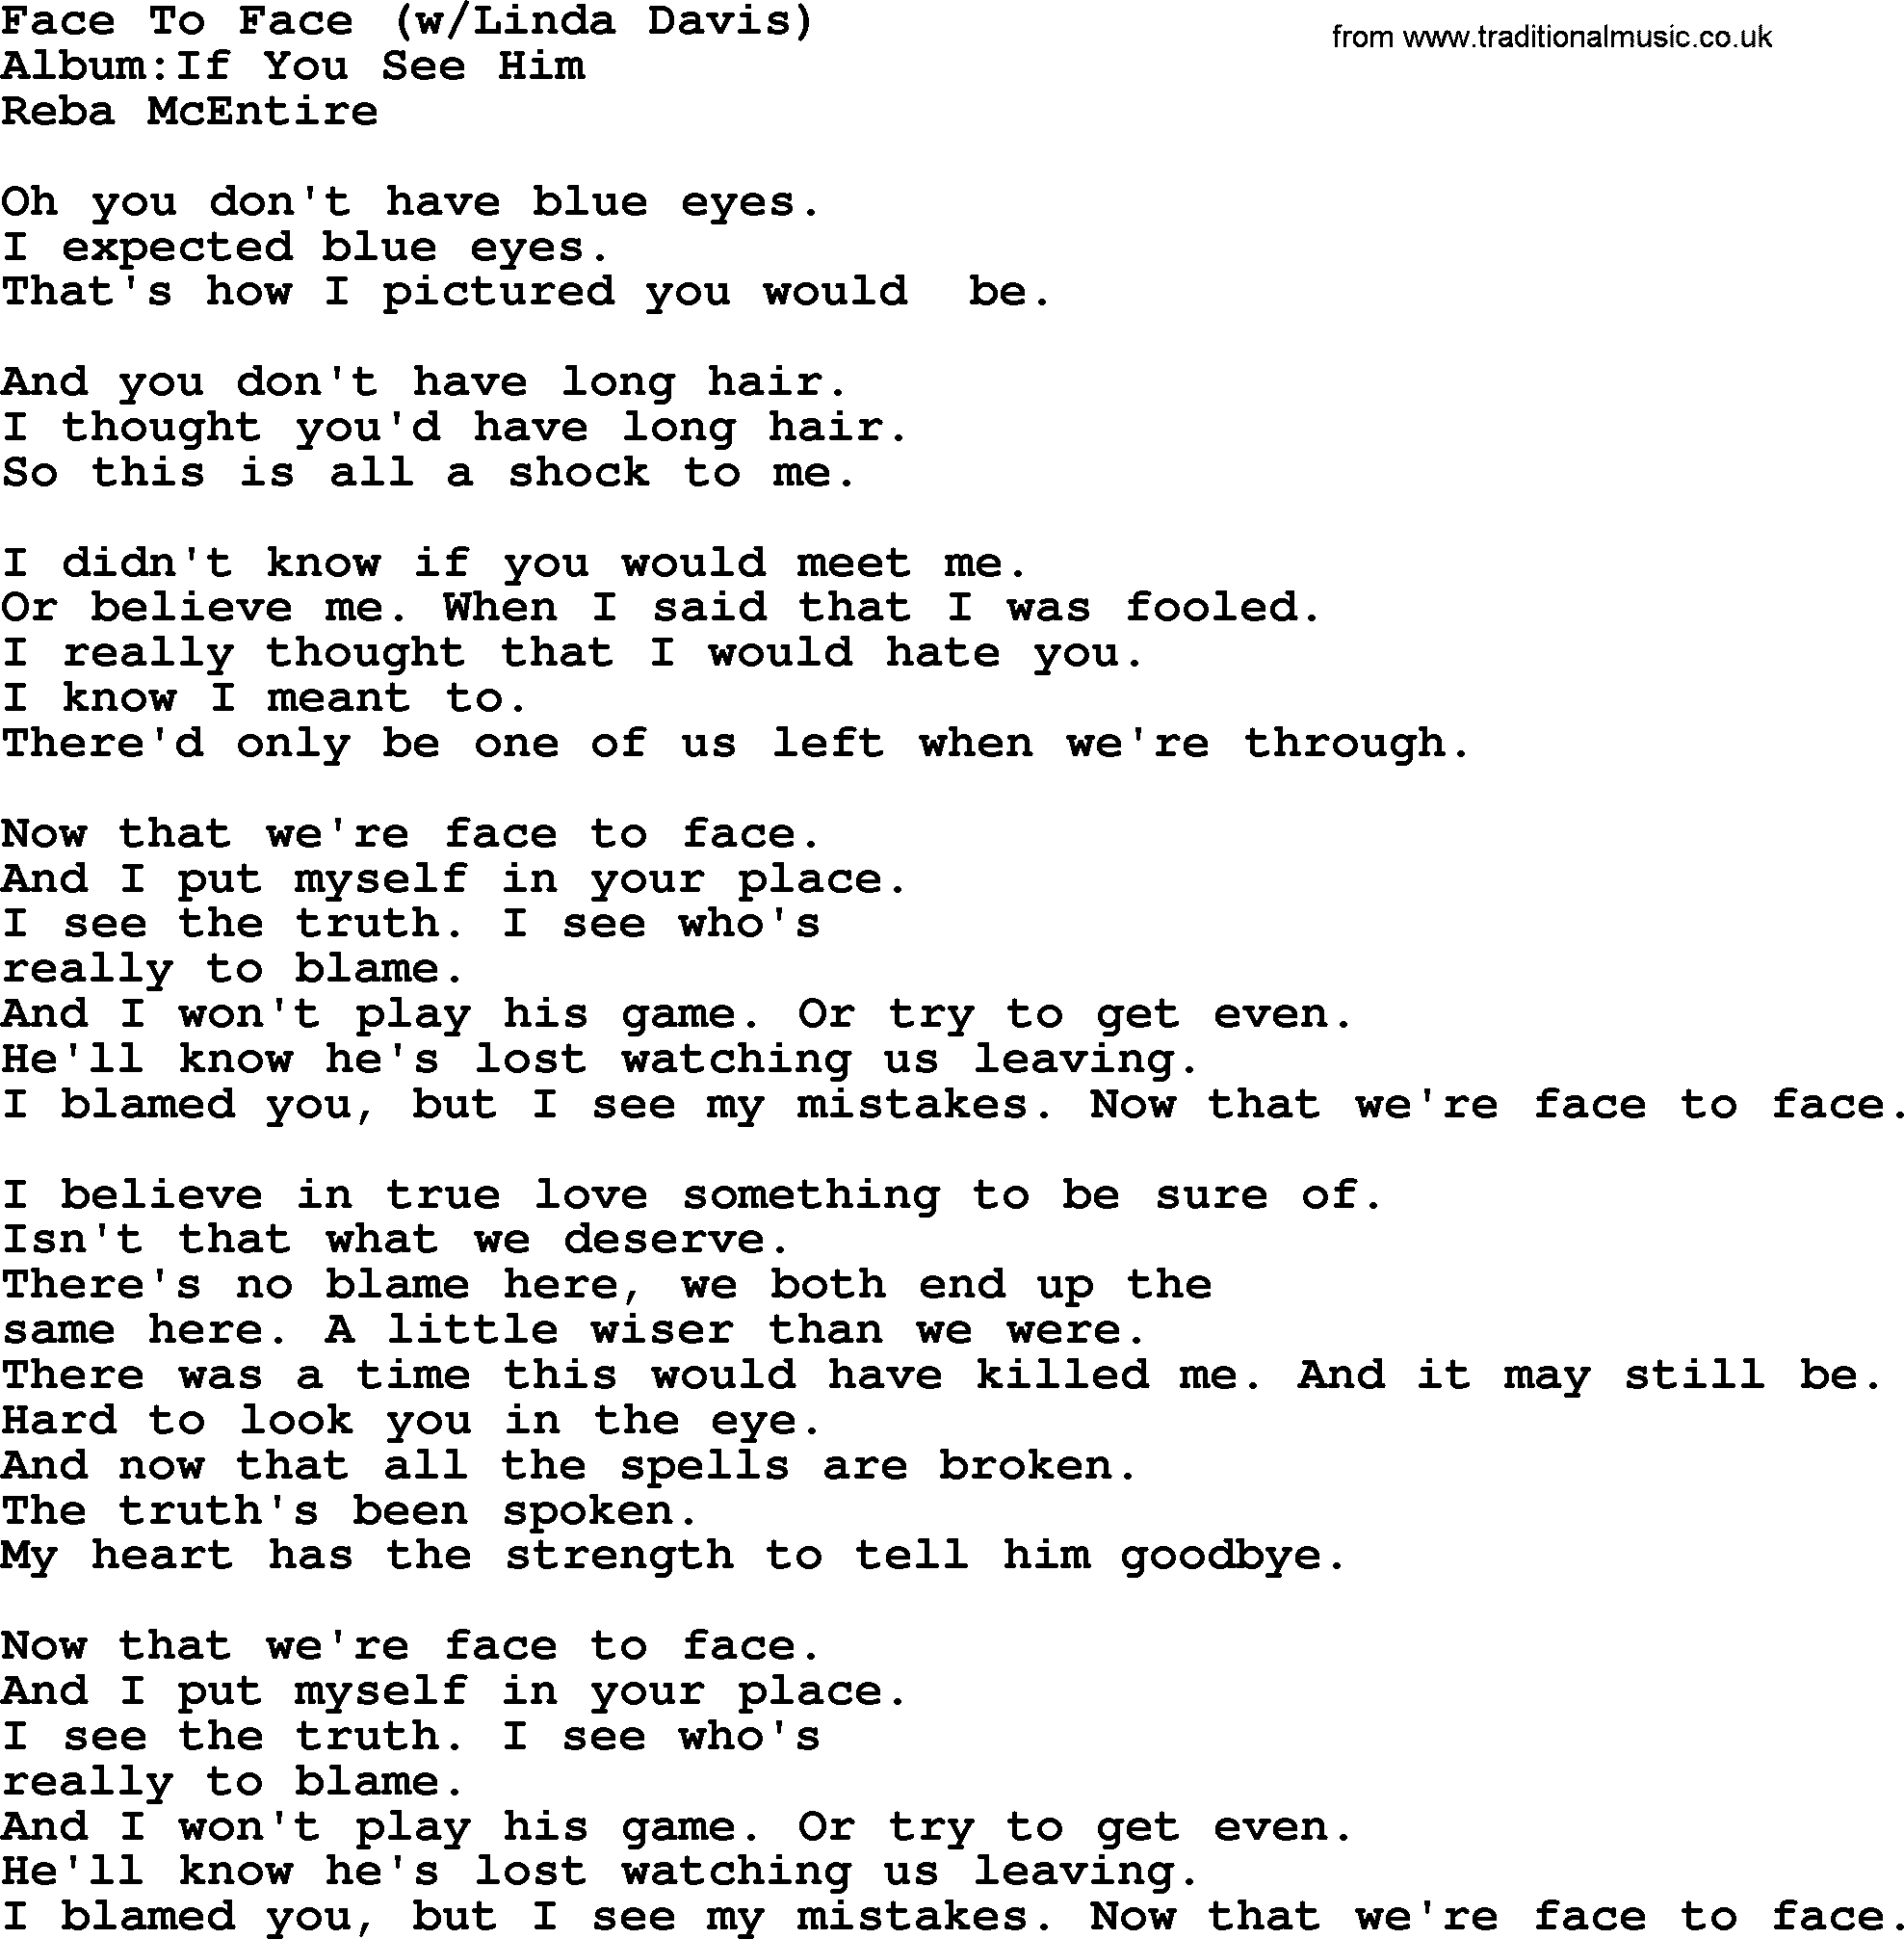 Reba McEntire song: Face To Face lyrics